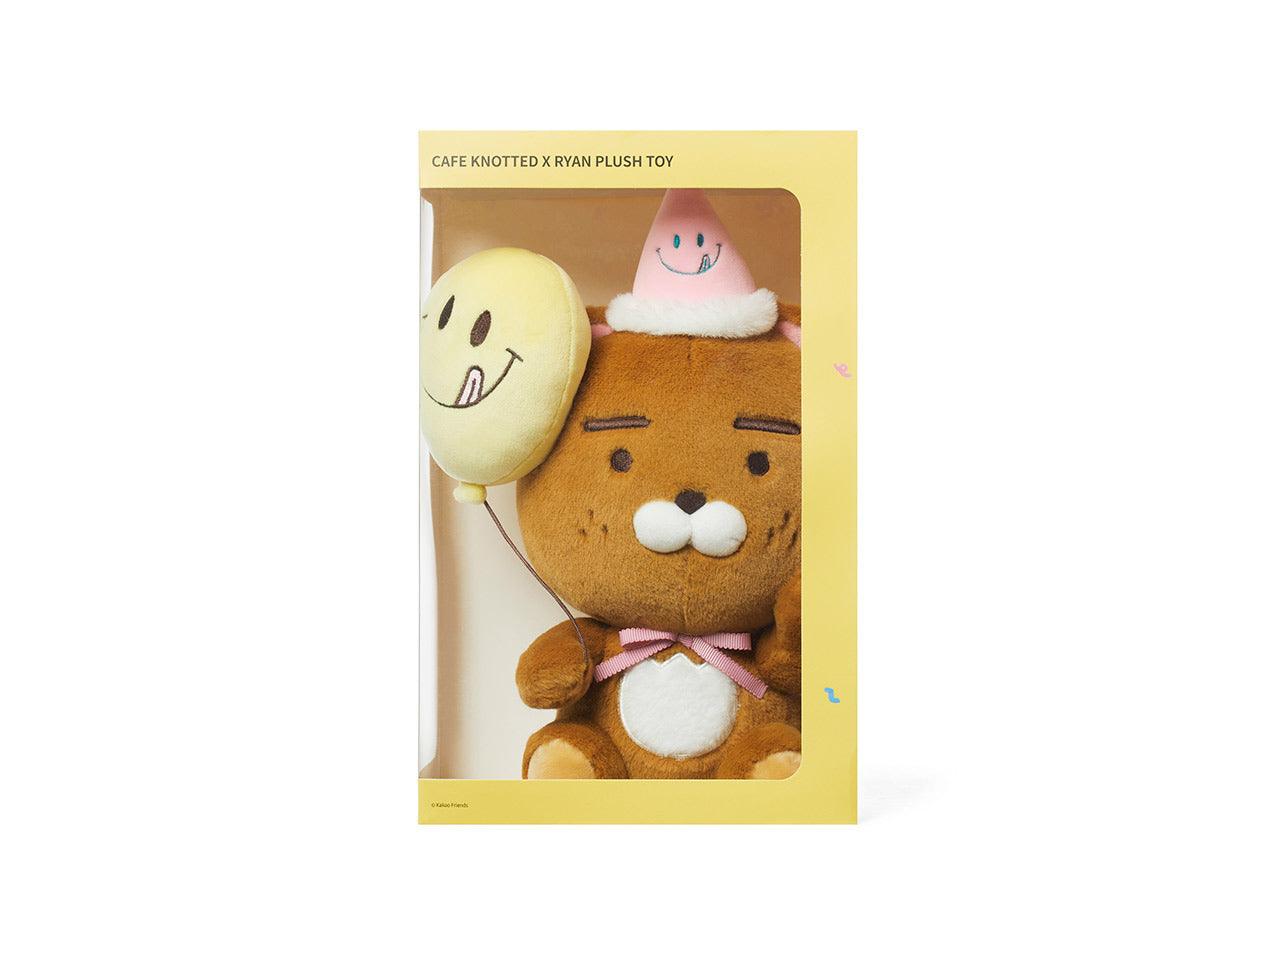 Kakao Friends x Cafe Knotted Ryan Birthday Plush Toy 生日公仔 - SOUL SIMPLE HK